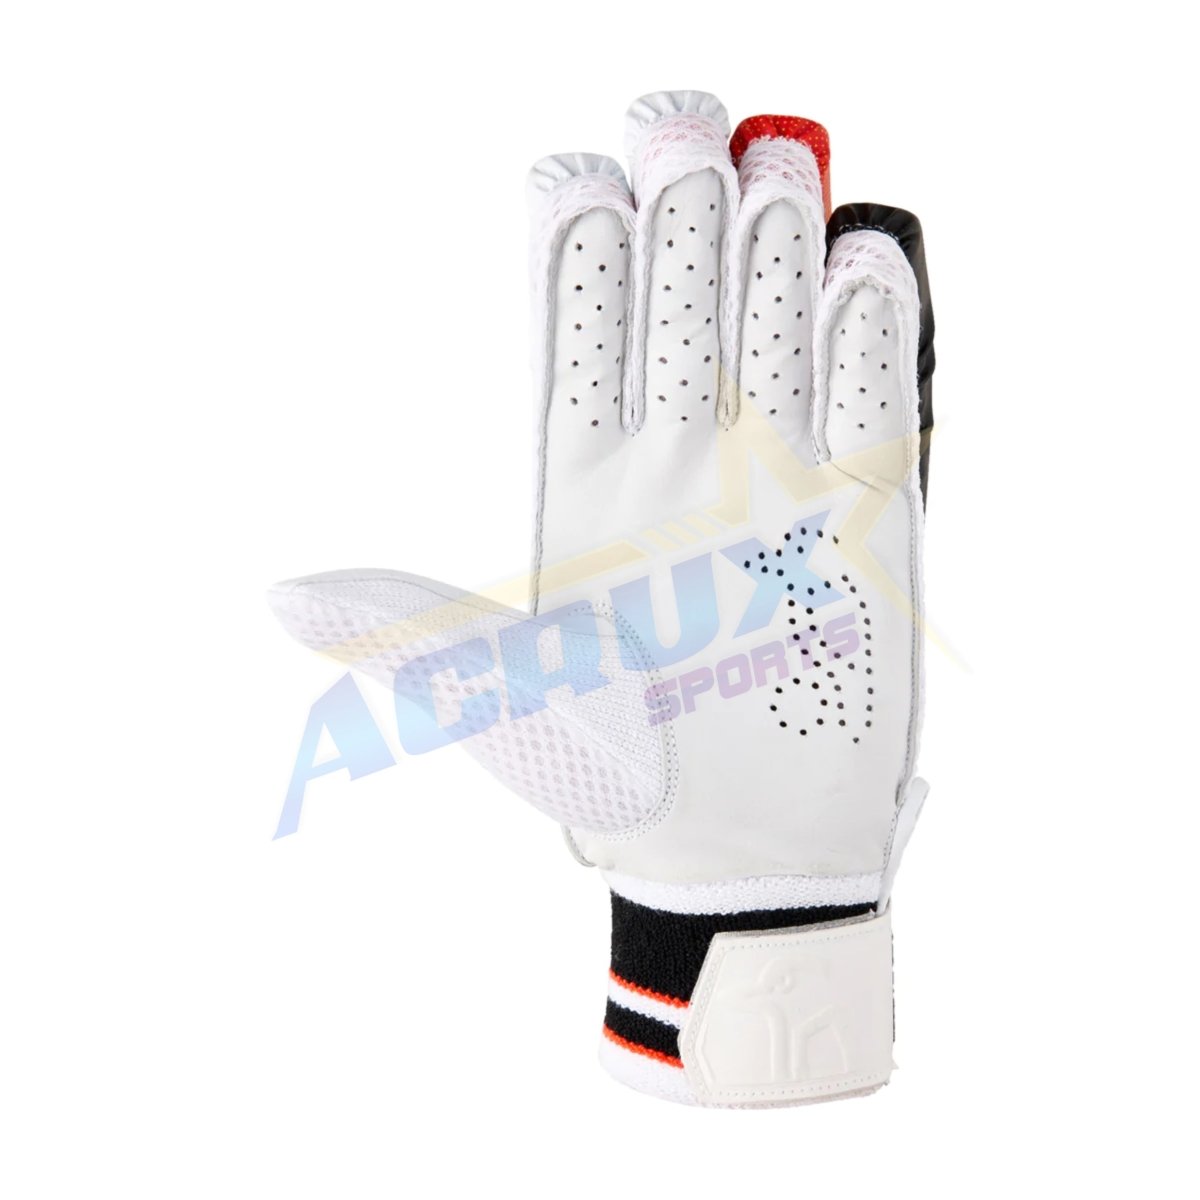 Kookaburra Beast Pro 6.0 Cricket Batting Gloves Junior - Acrux Sports